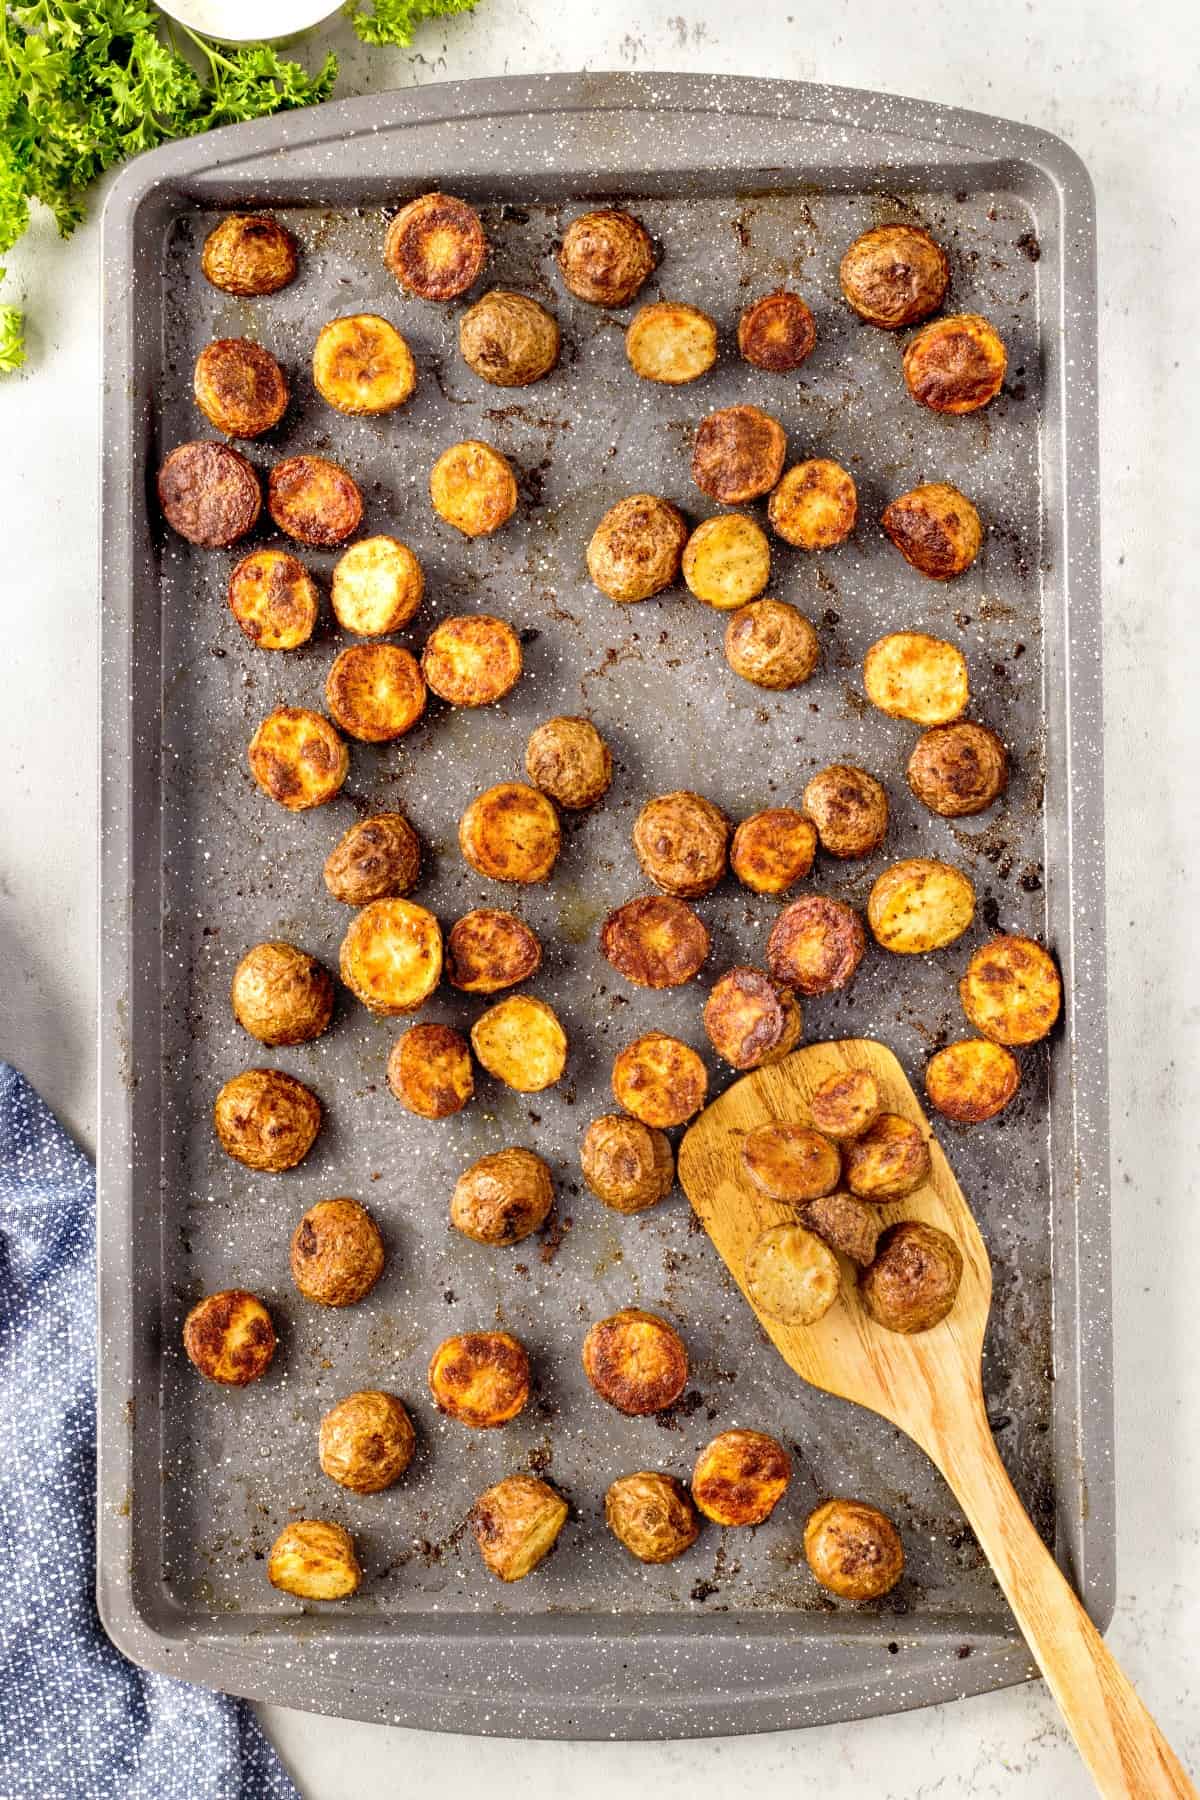 Overhead of roasted potatoes on a baking sheet